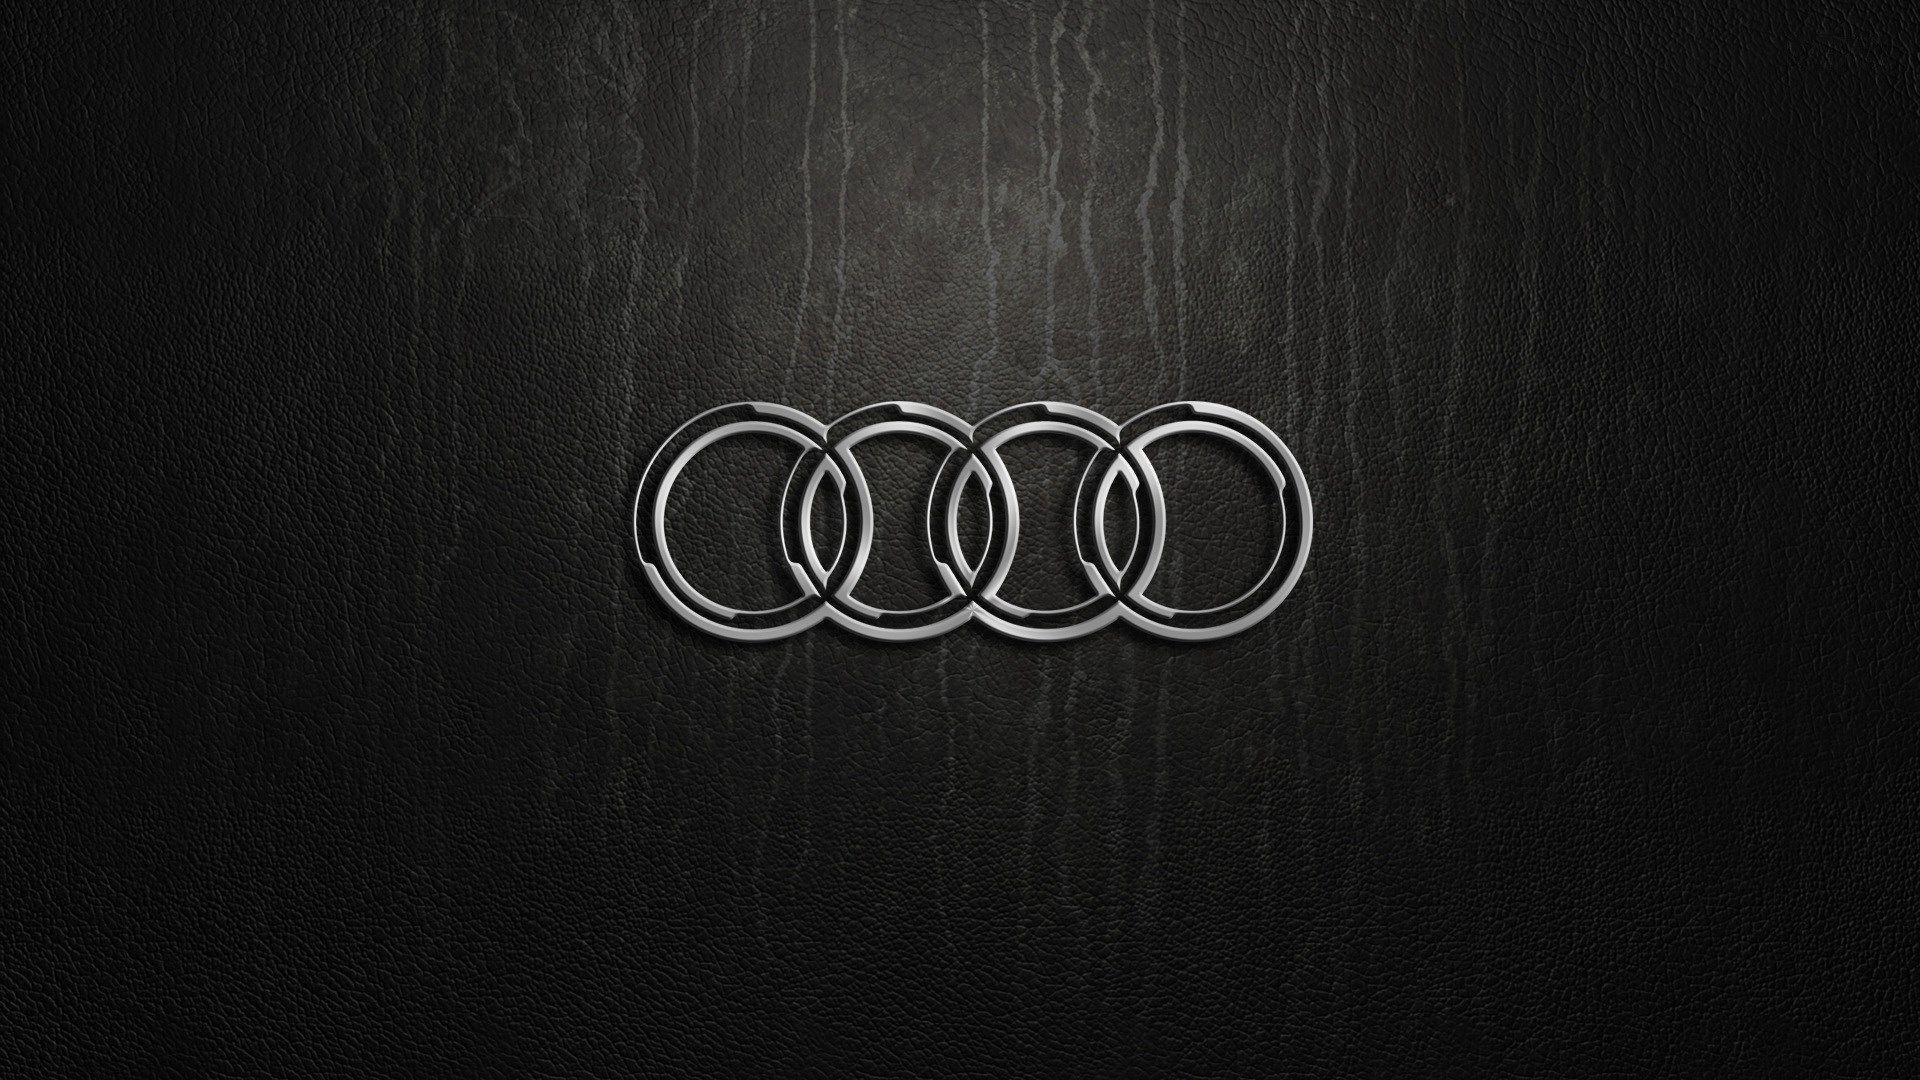 Cool HD Logo - audi logo wallpaper full HD. ololoshenka. Wallpaper, Logos, Cars